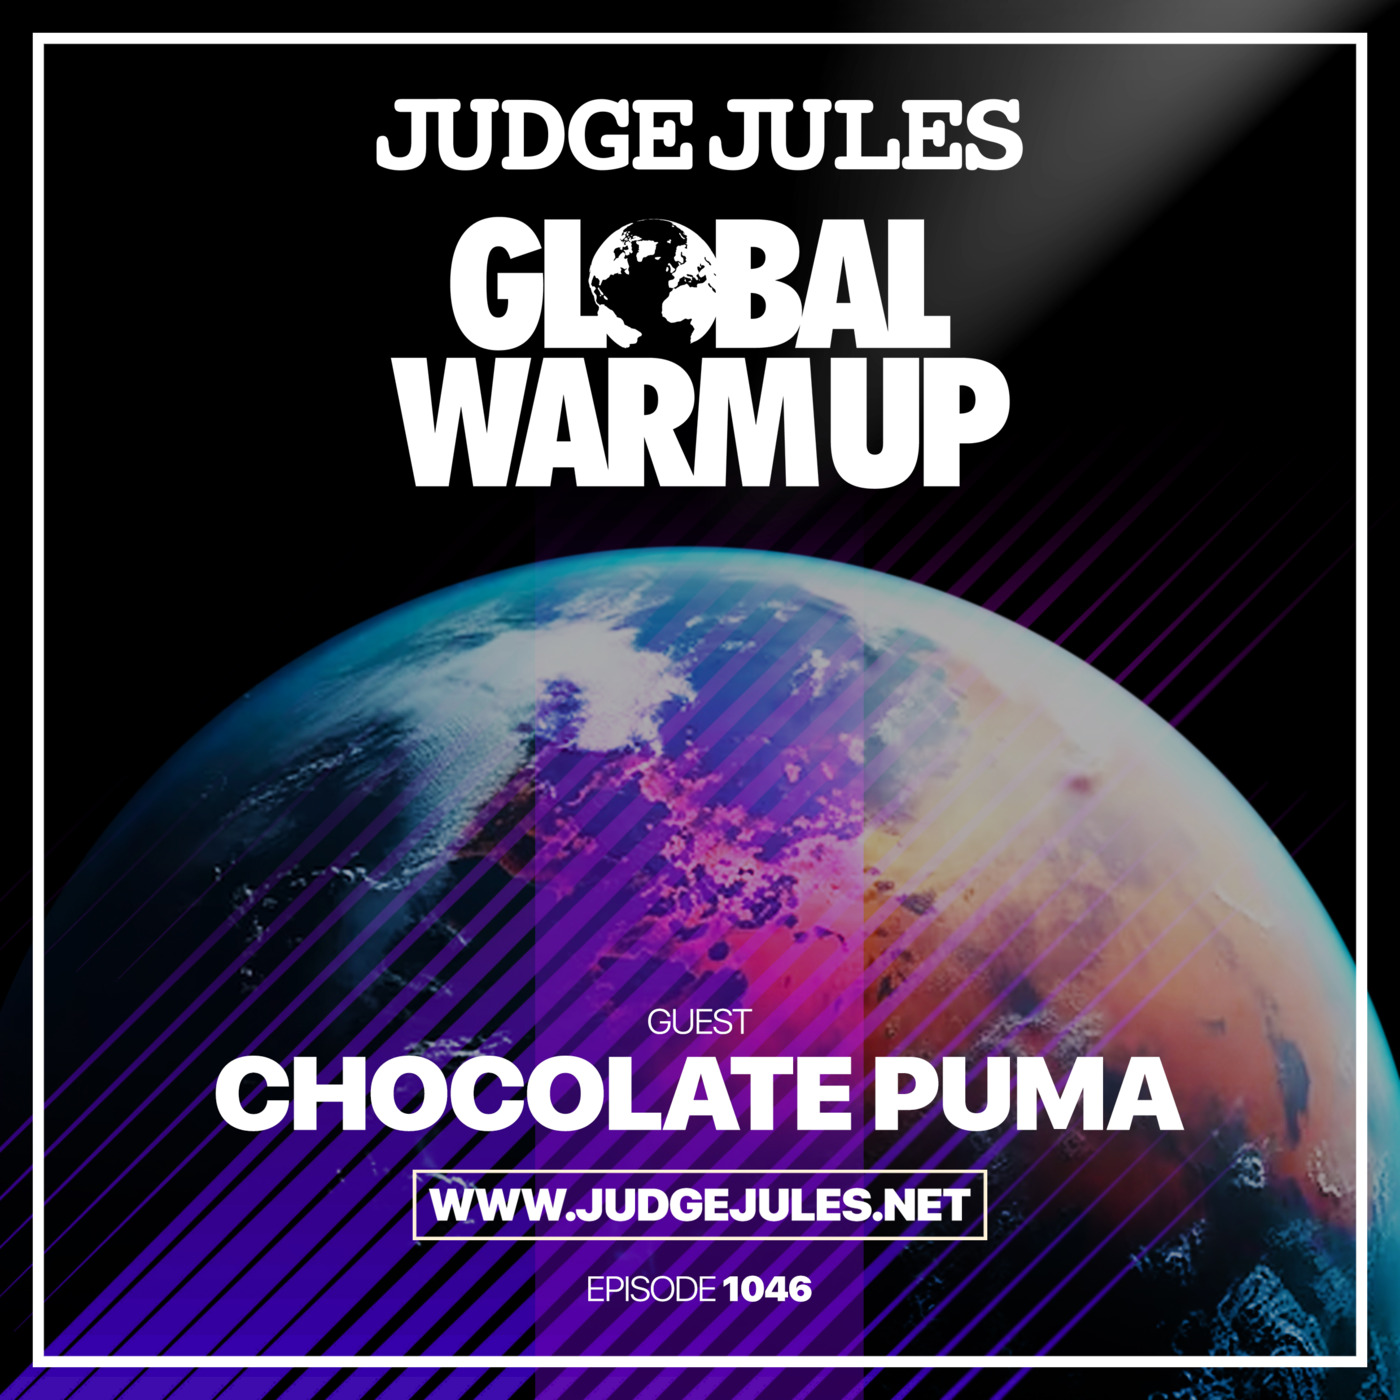 Episode 1046: JUDGE JULES PRESENTS THE GLOBAL WARM UP EPISODE 1046